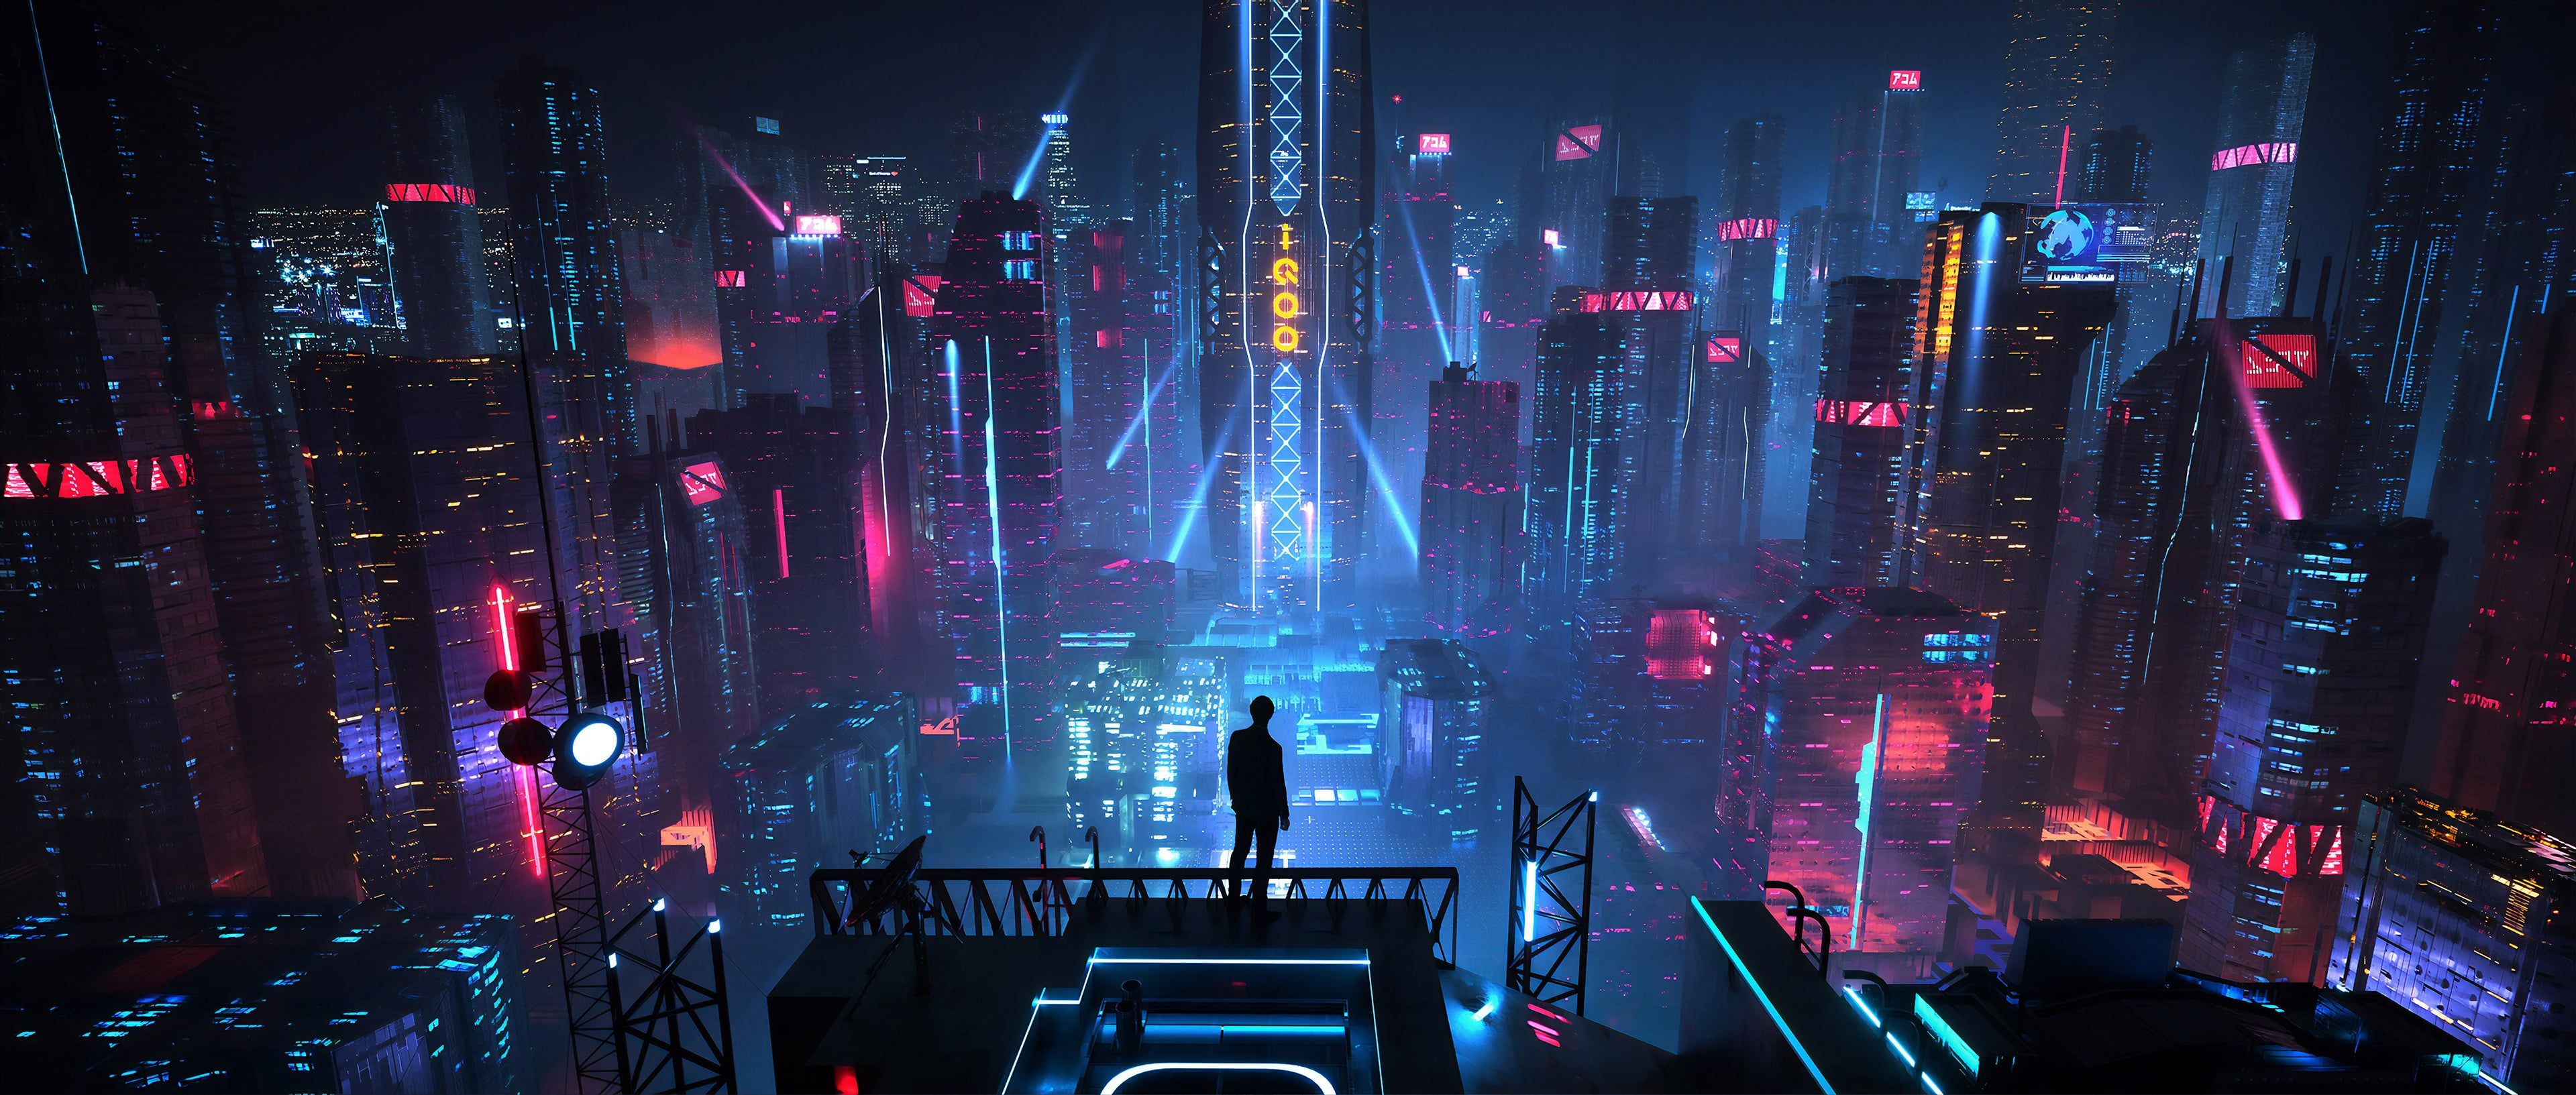 Cyberpunk City 4k Wallpaper Futuristic